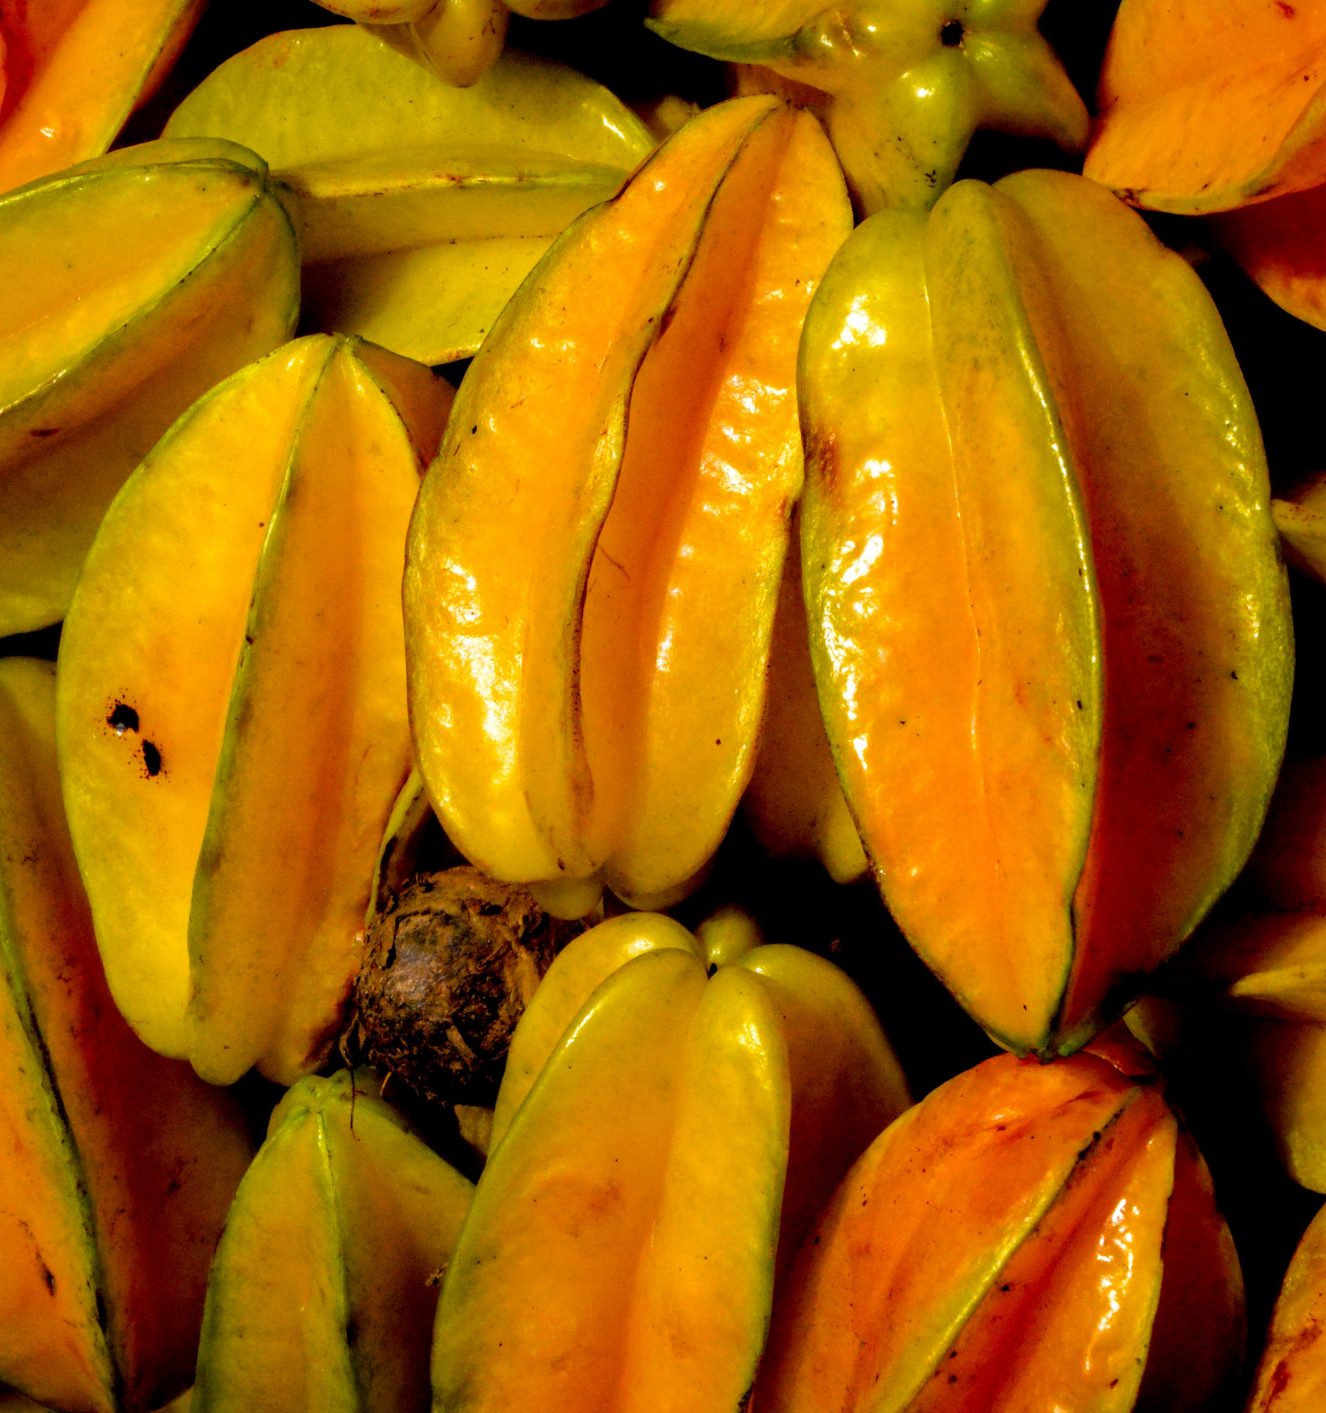 Starfruit or carambola